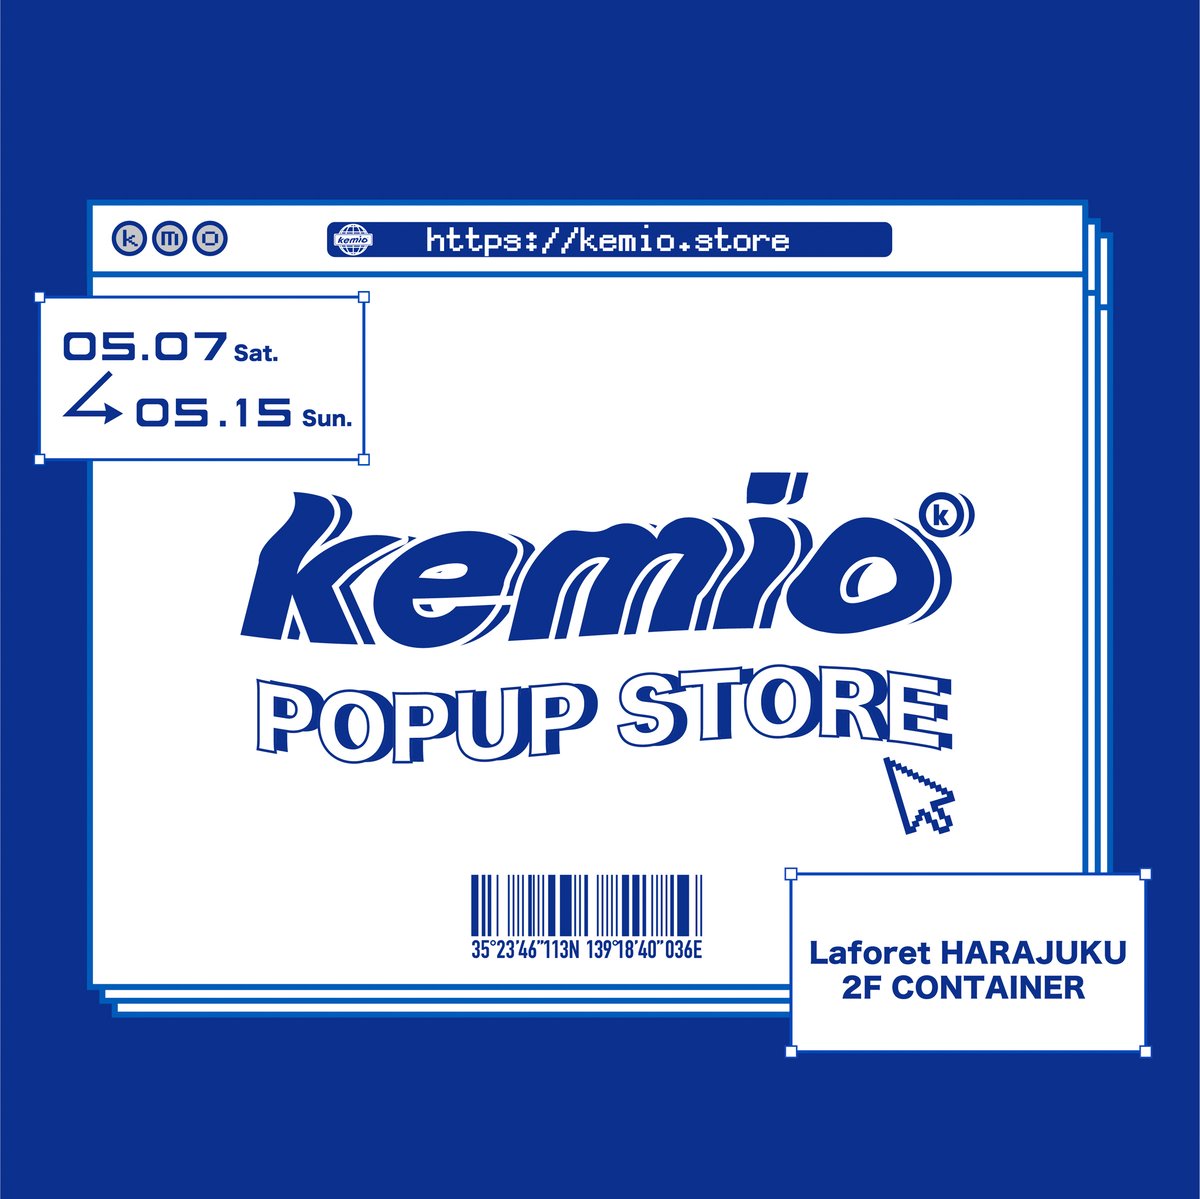 「kemio store」ポップアップショップのヴィジュアル